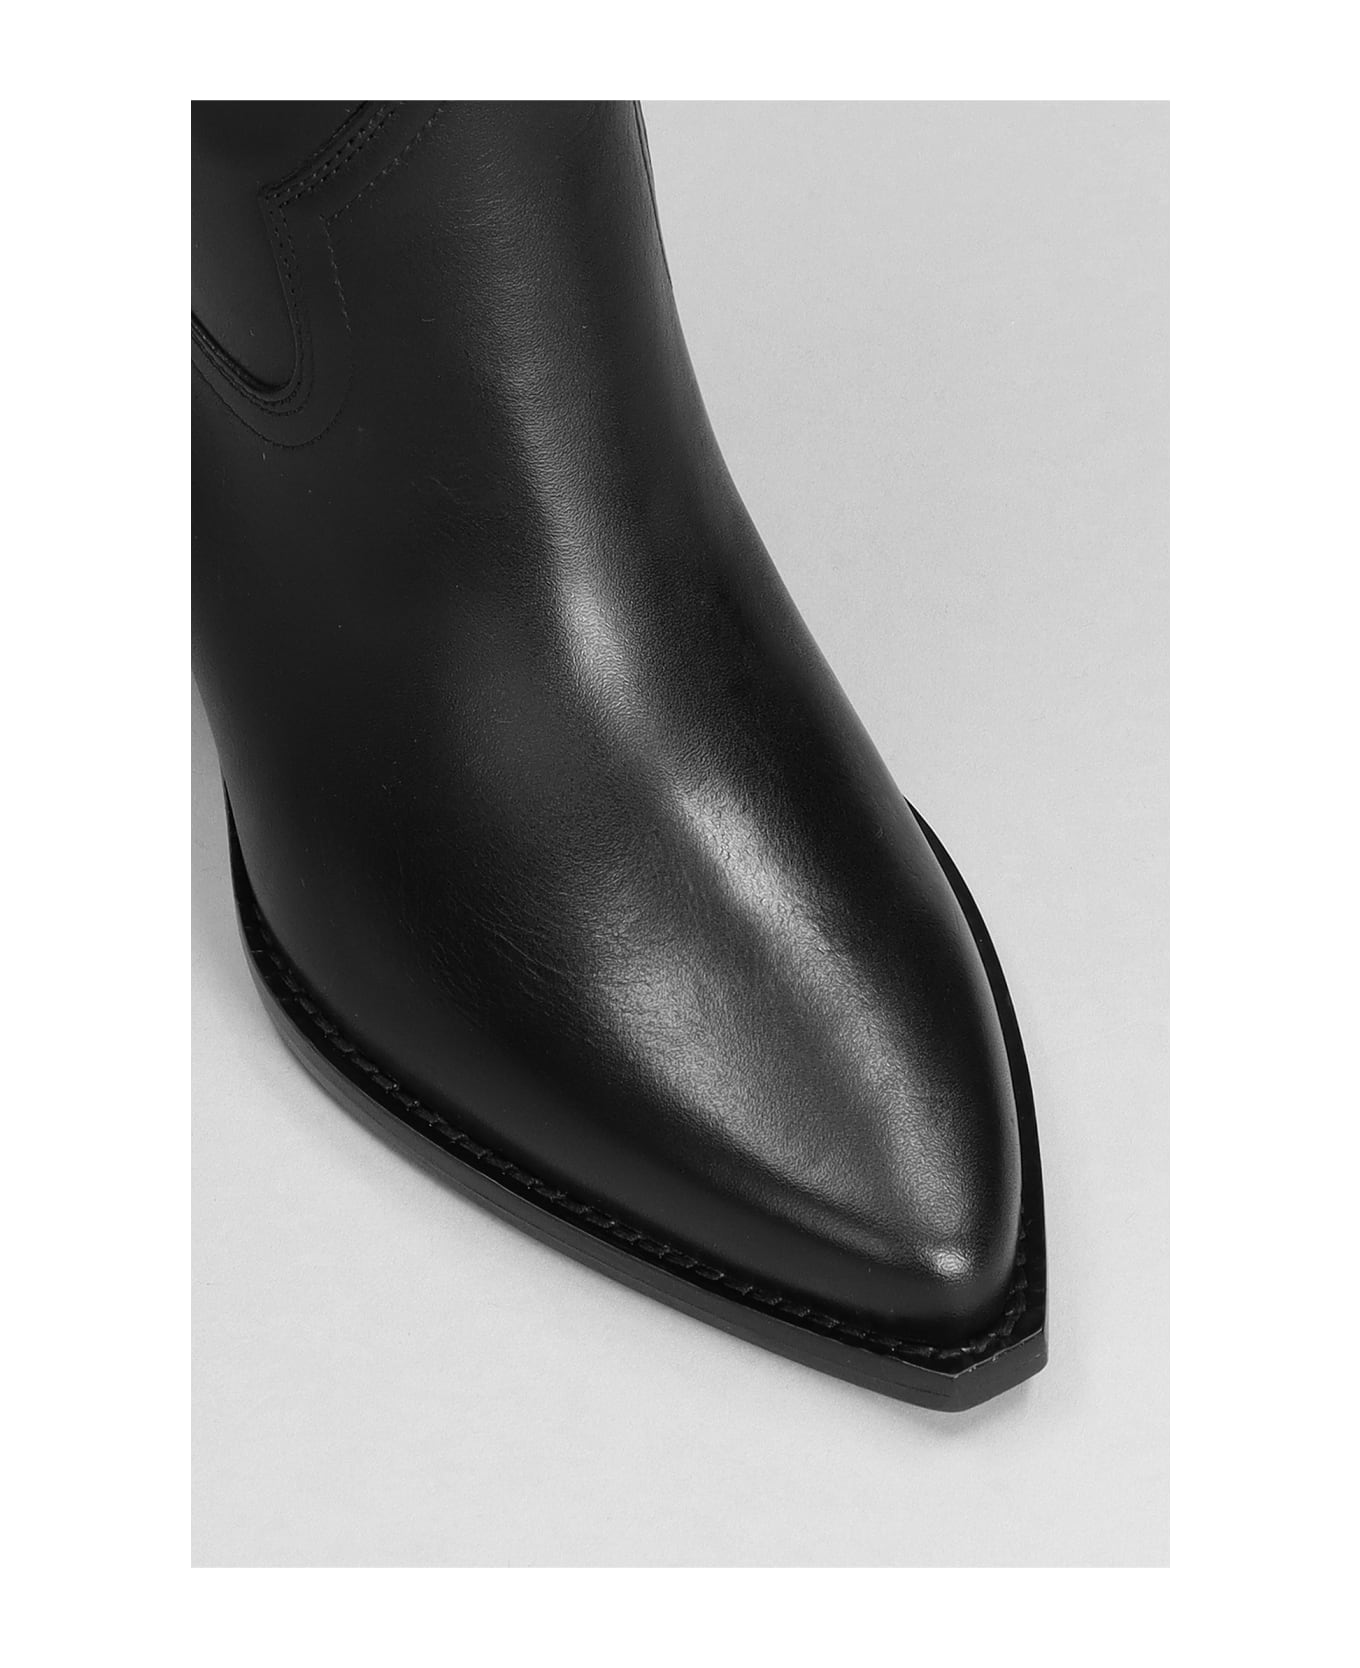 Isabel Marant 'dahope' Leather Cowboy Boots - Black ブーツ